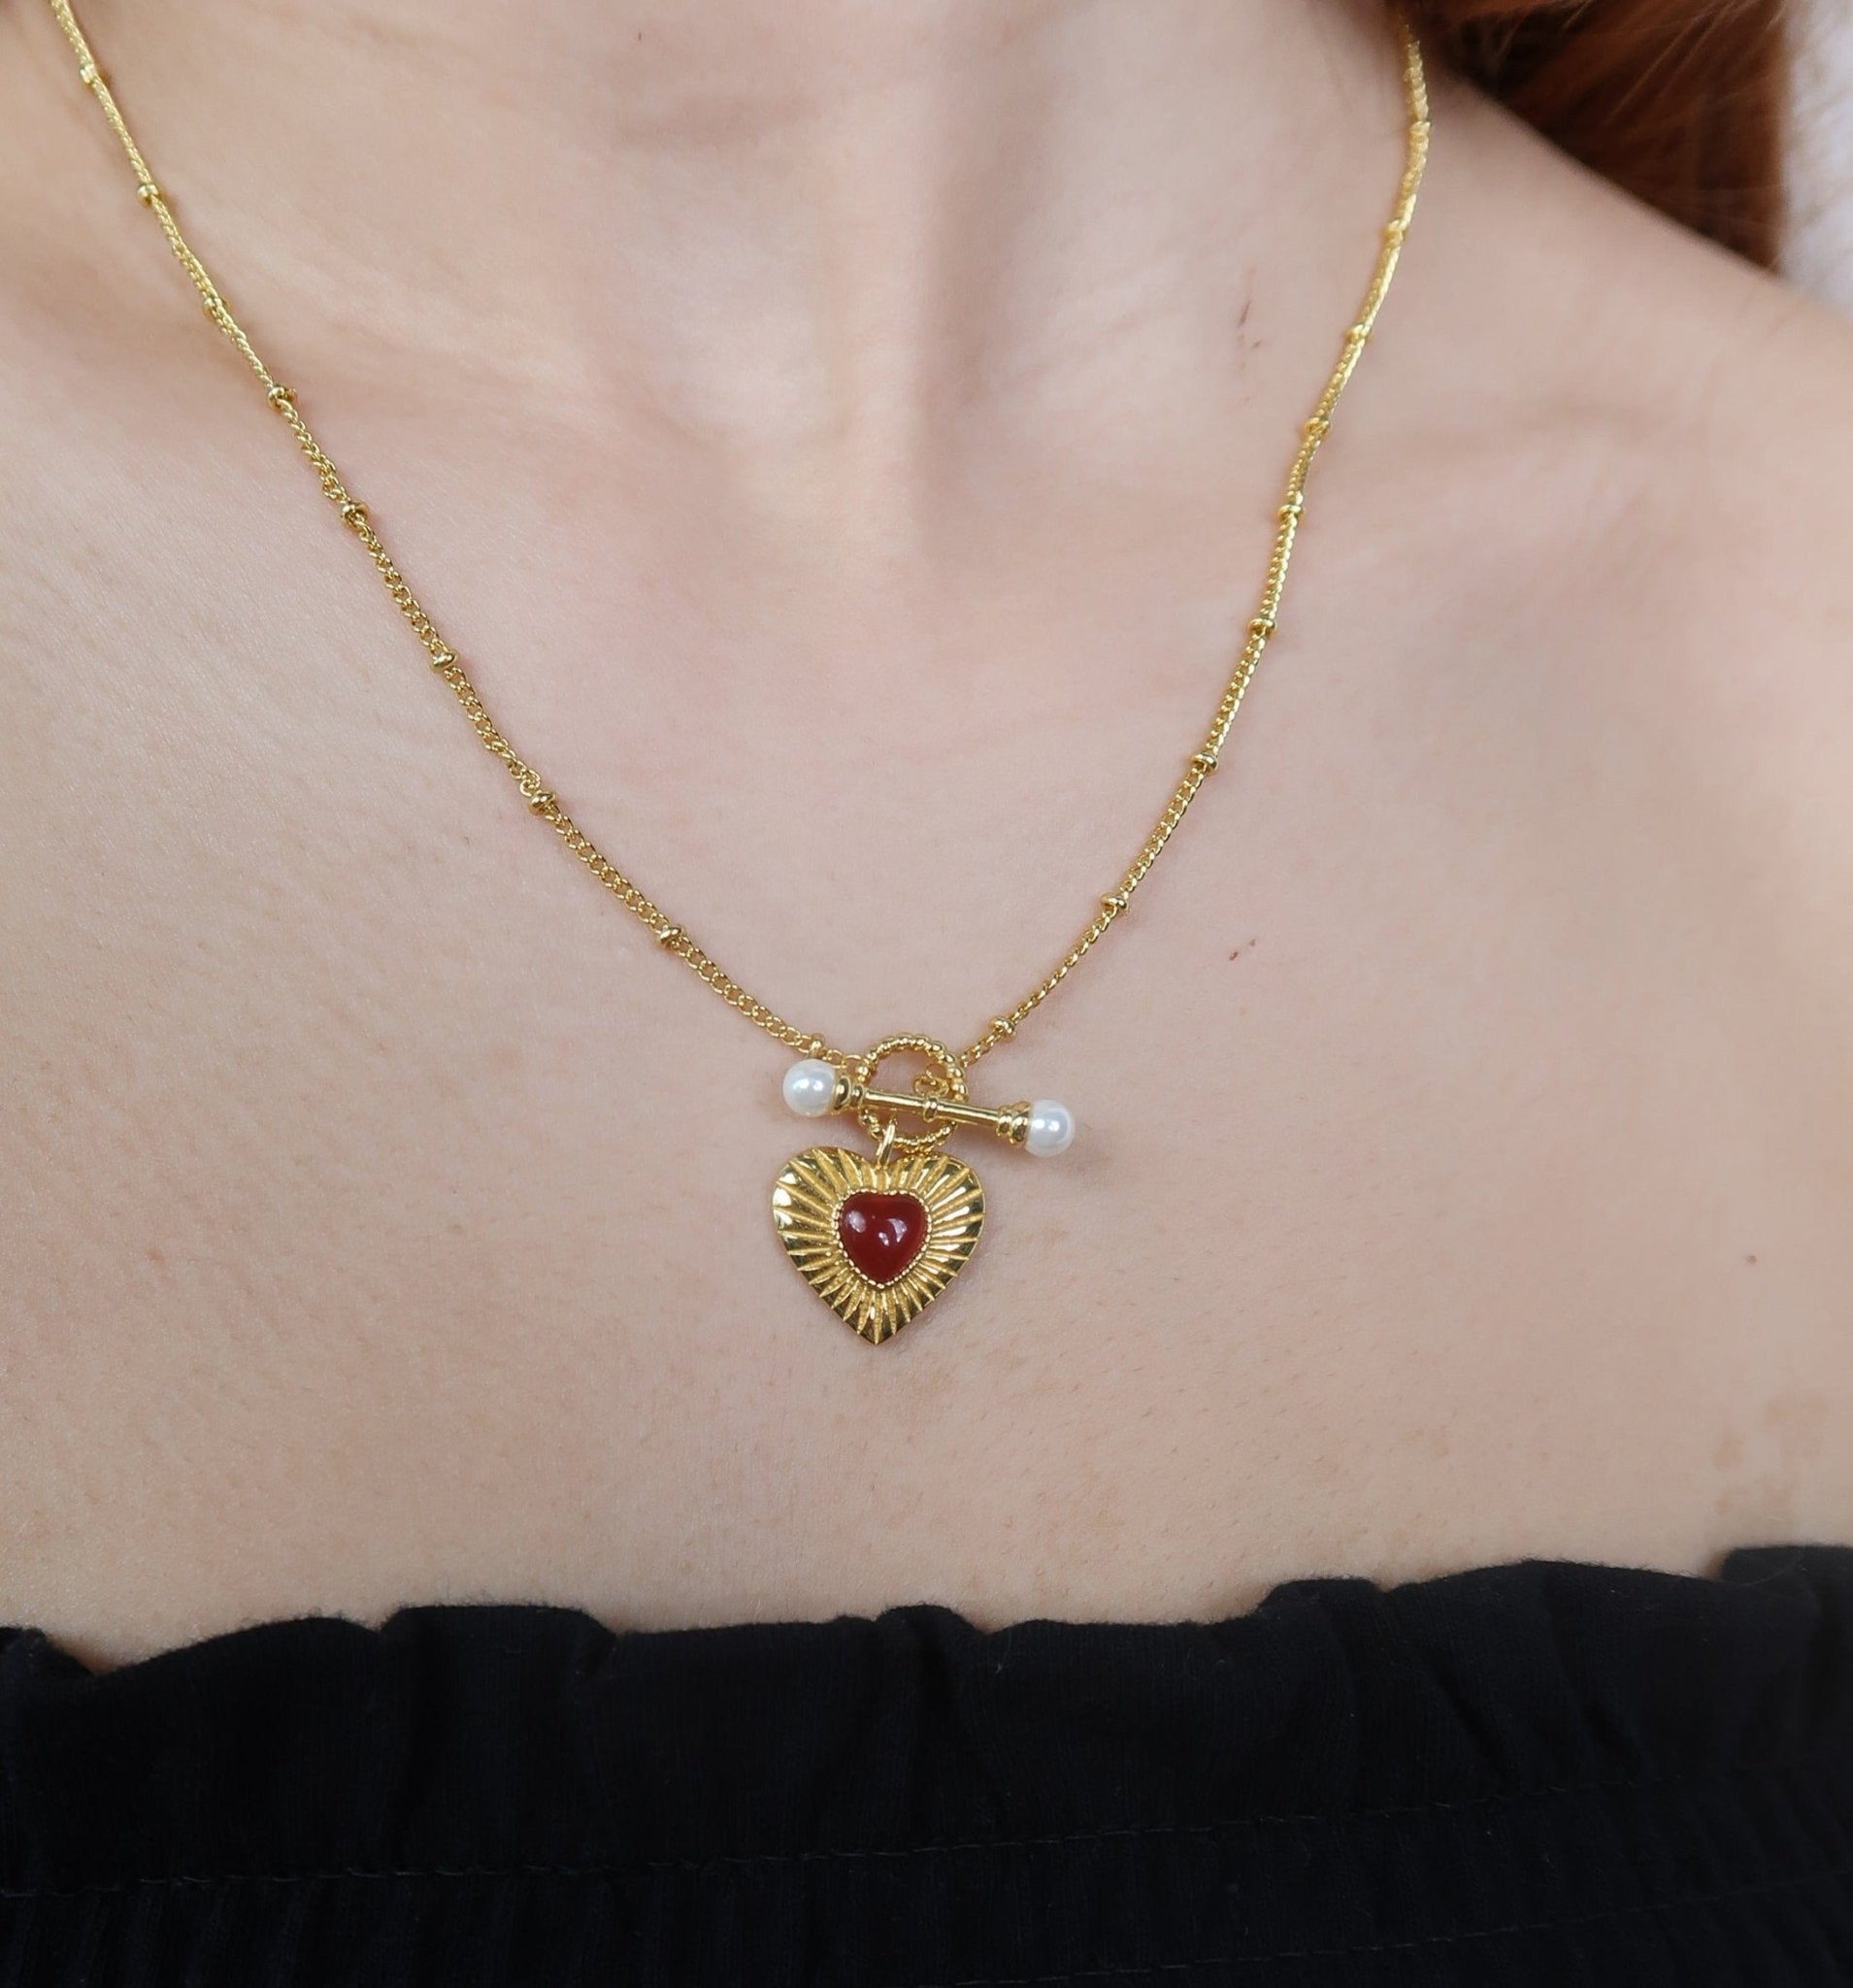 Helena Carnelian Heart Collar